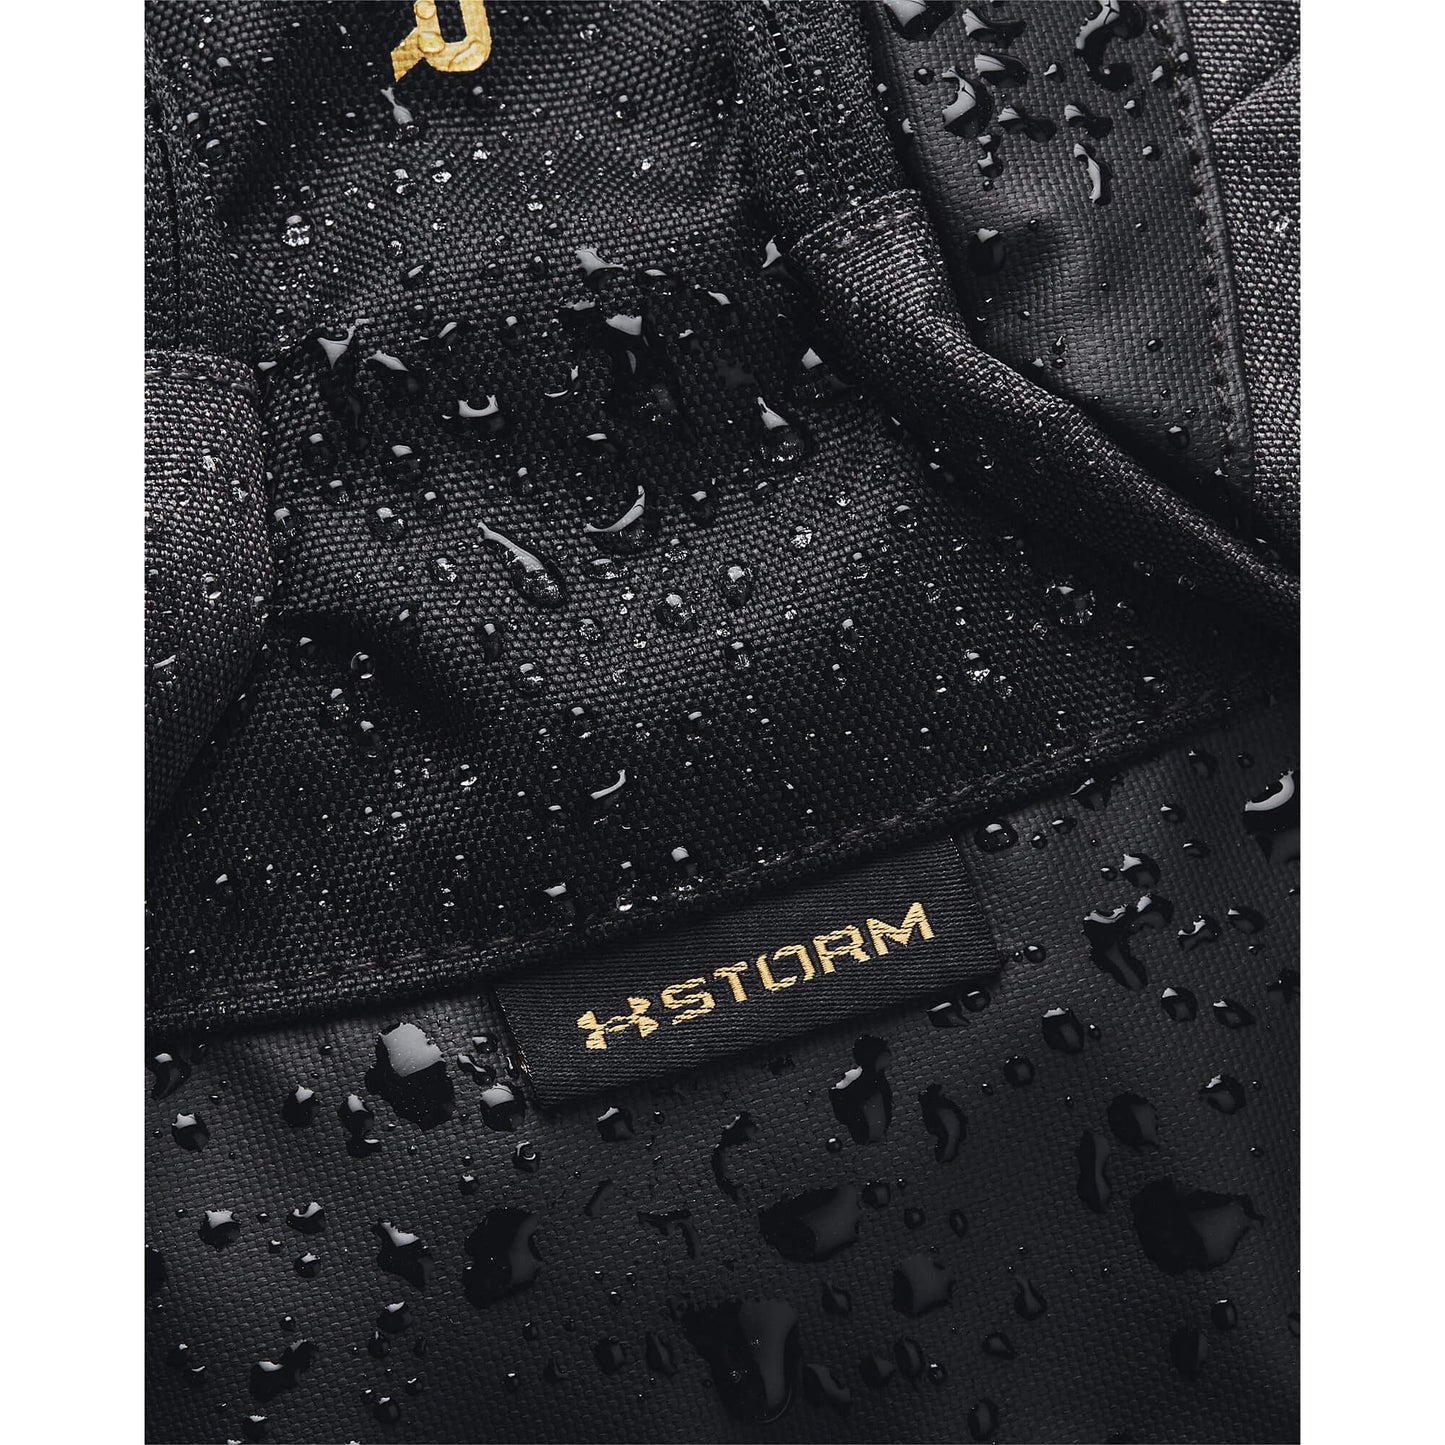 Under Armour UA Storm Hustle Pro Backpack Black Medium Heather/Black/Metallic Gold